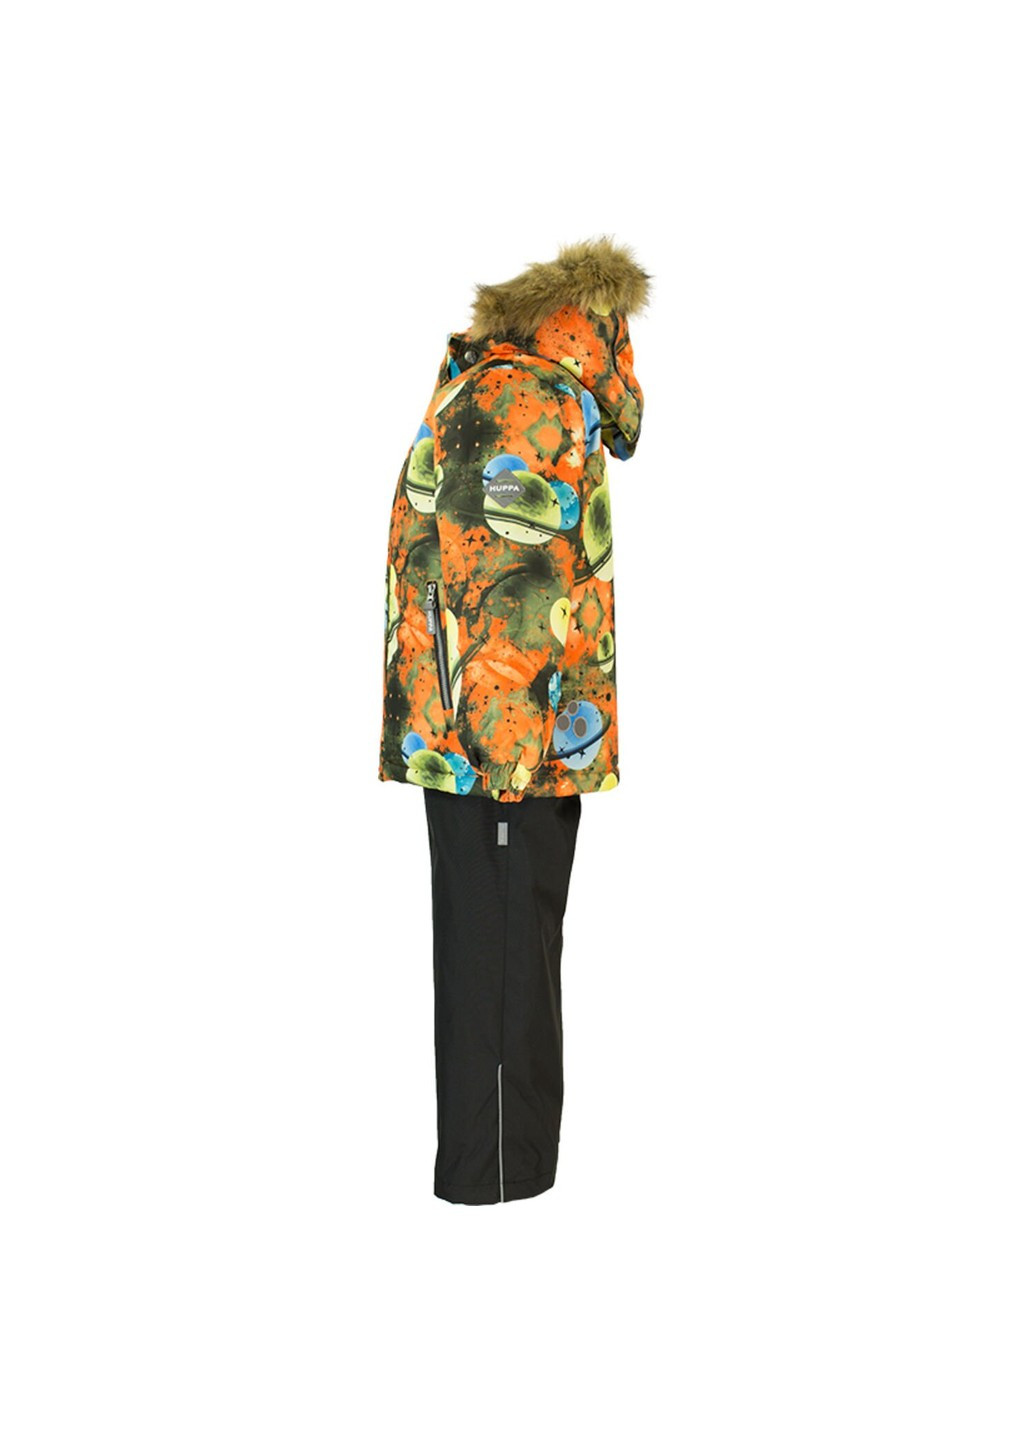 Оранжевый зимний комплект зимний (куртка + полукомбинезон) dante 1 Huppa